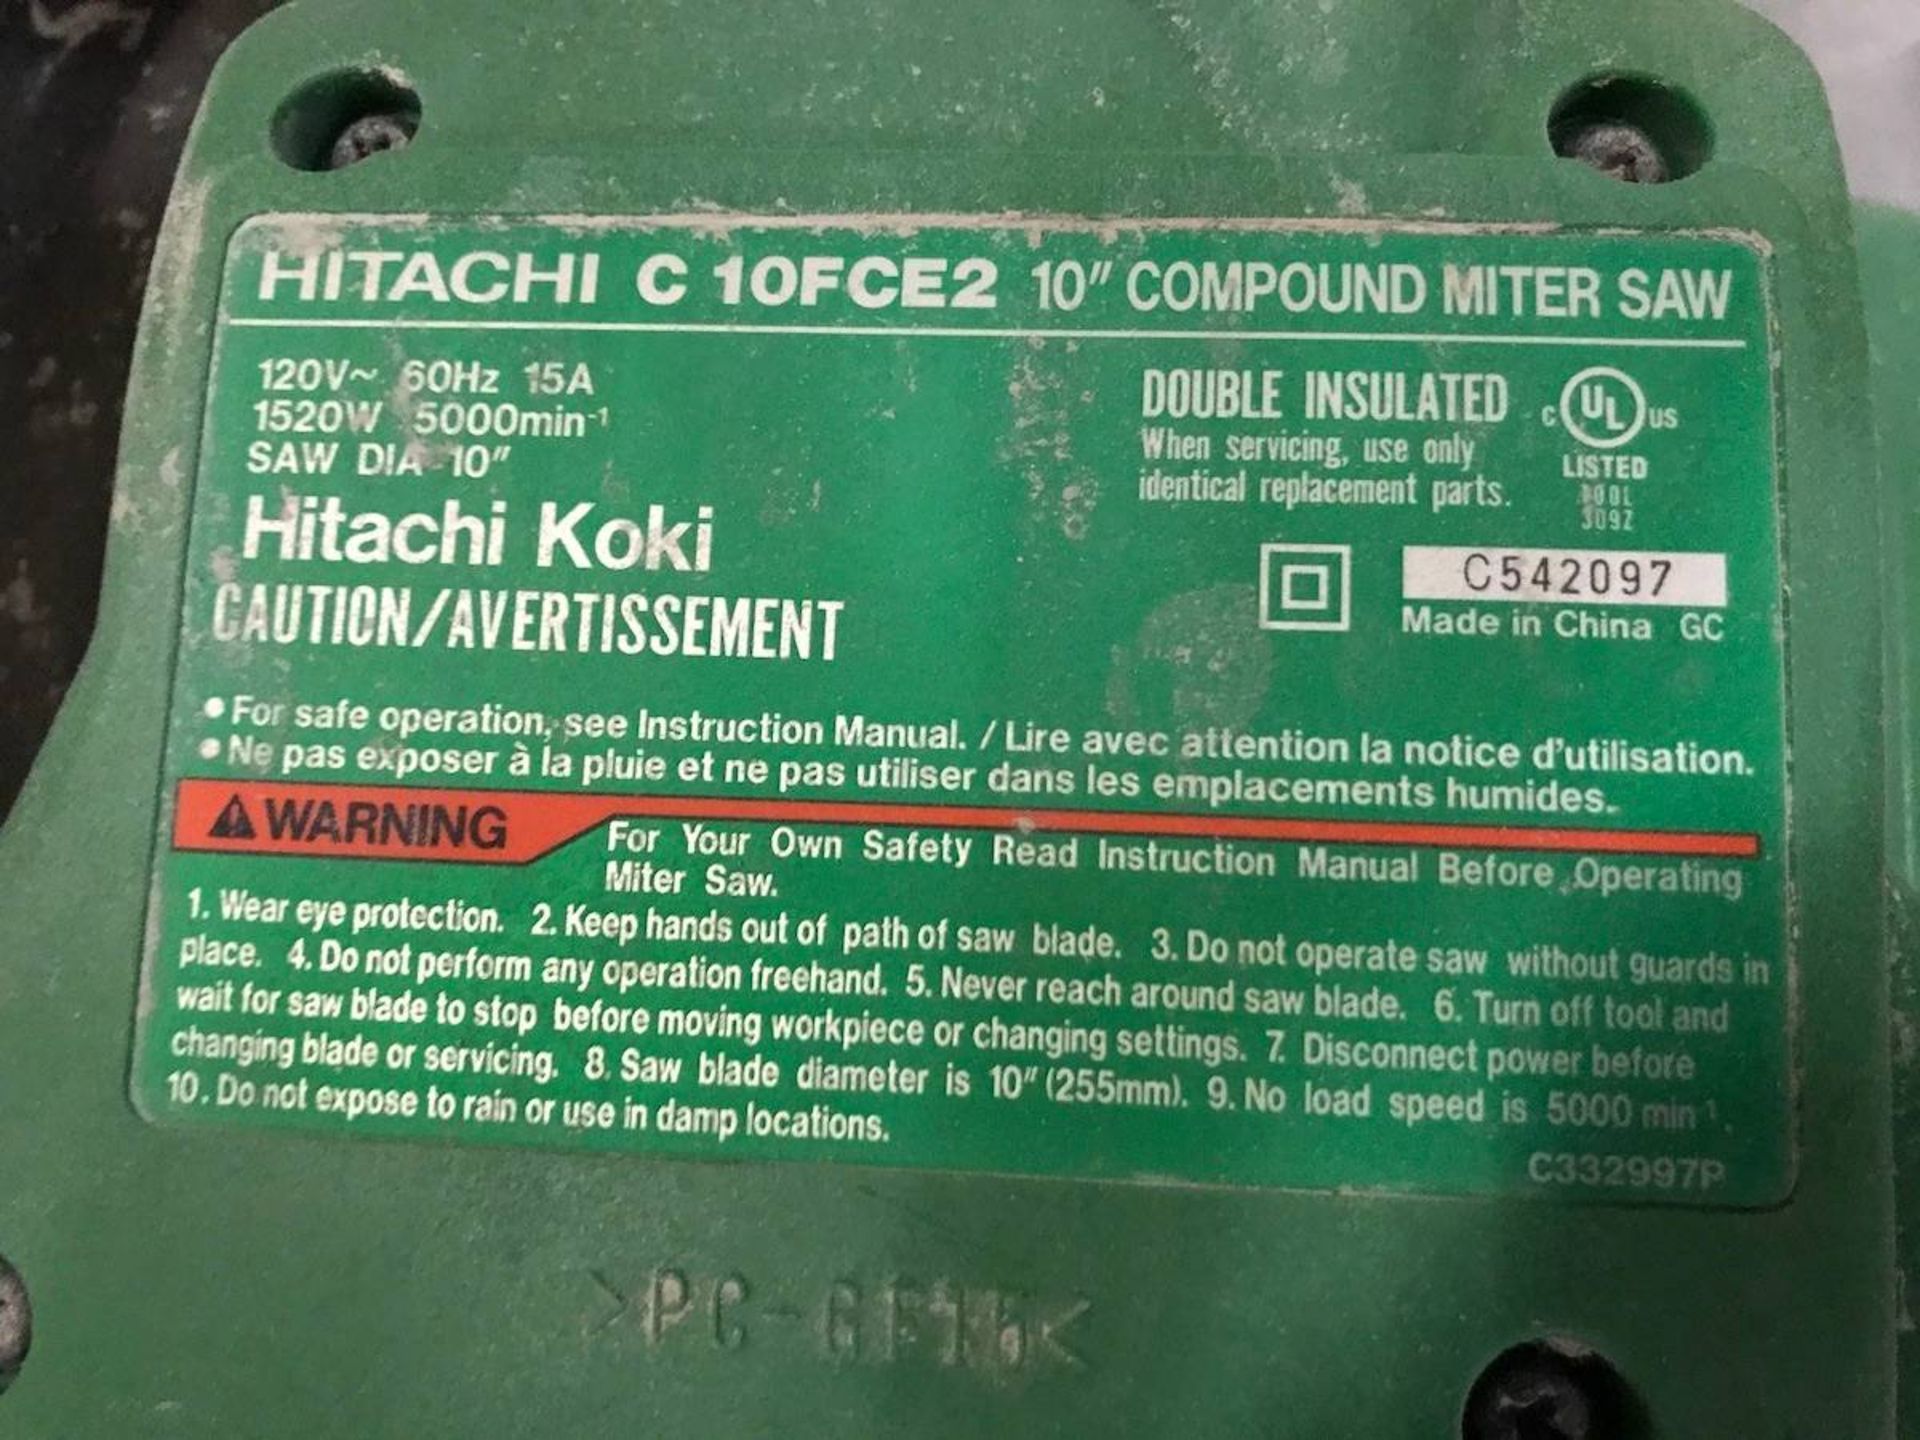 Hitachi C10FCE2 10" Compound Miter Saw - Image 3 of 4